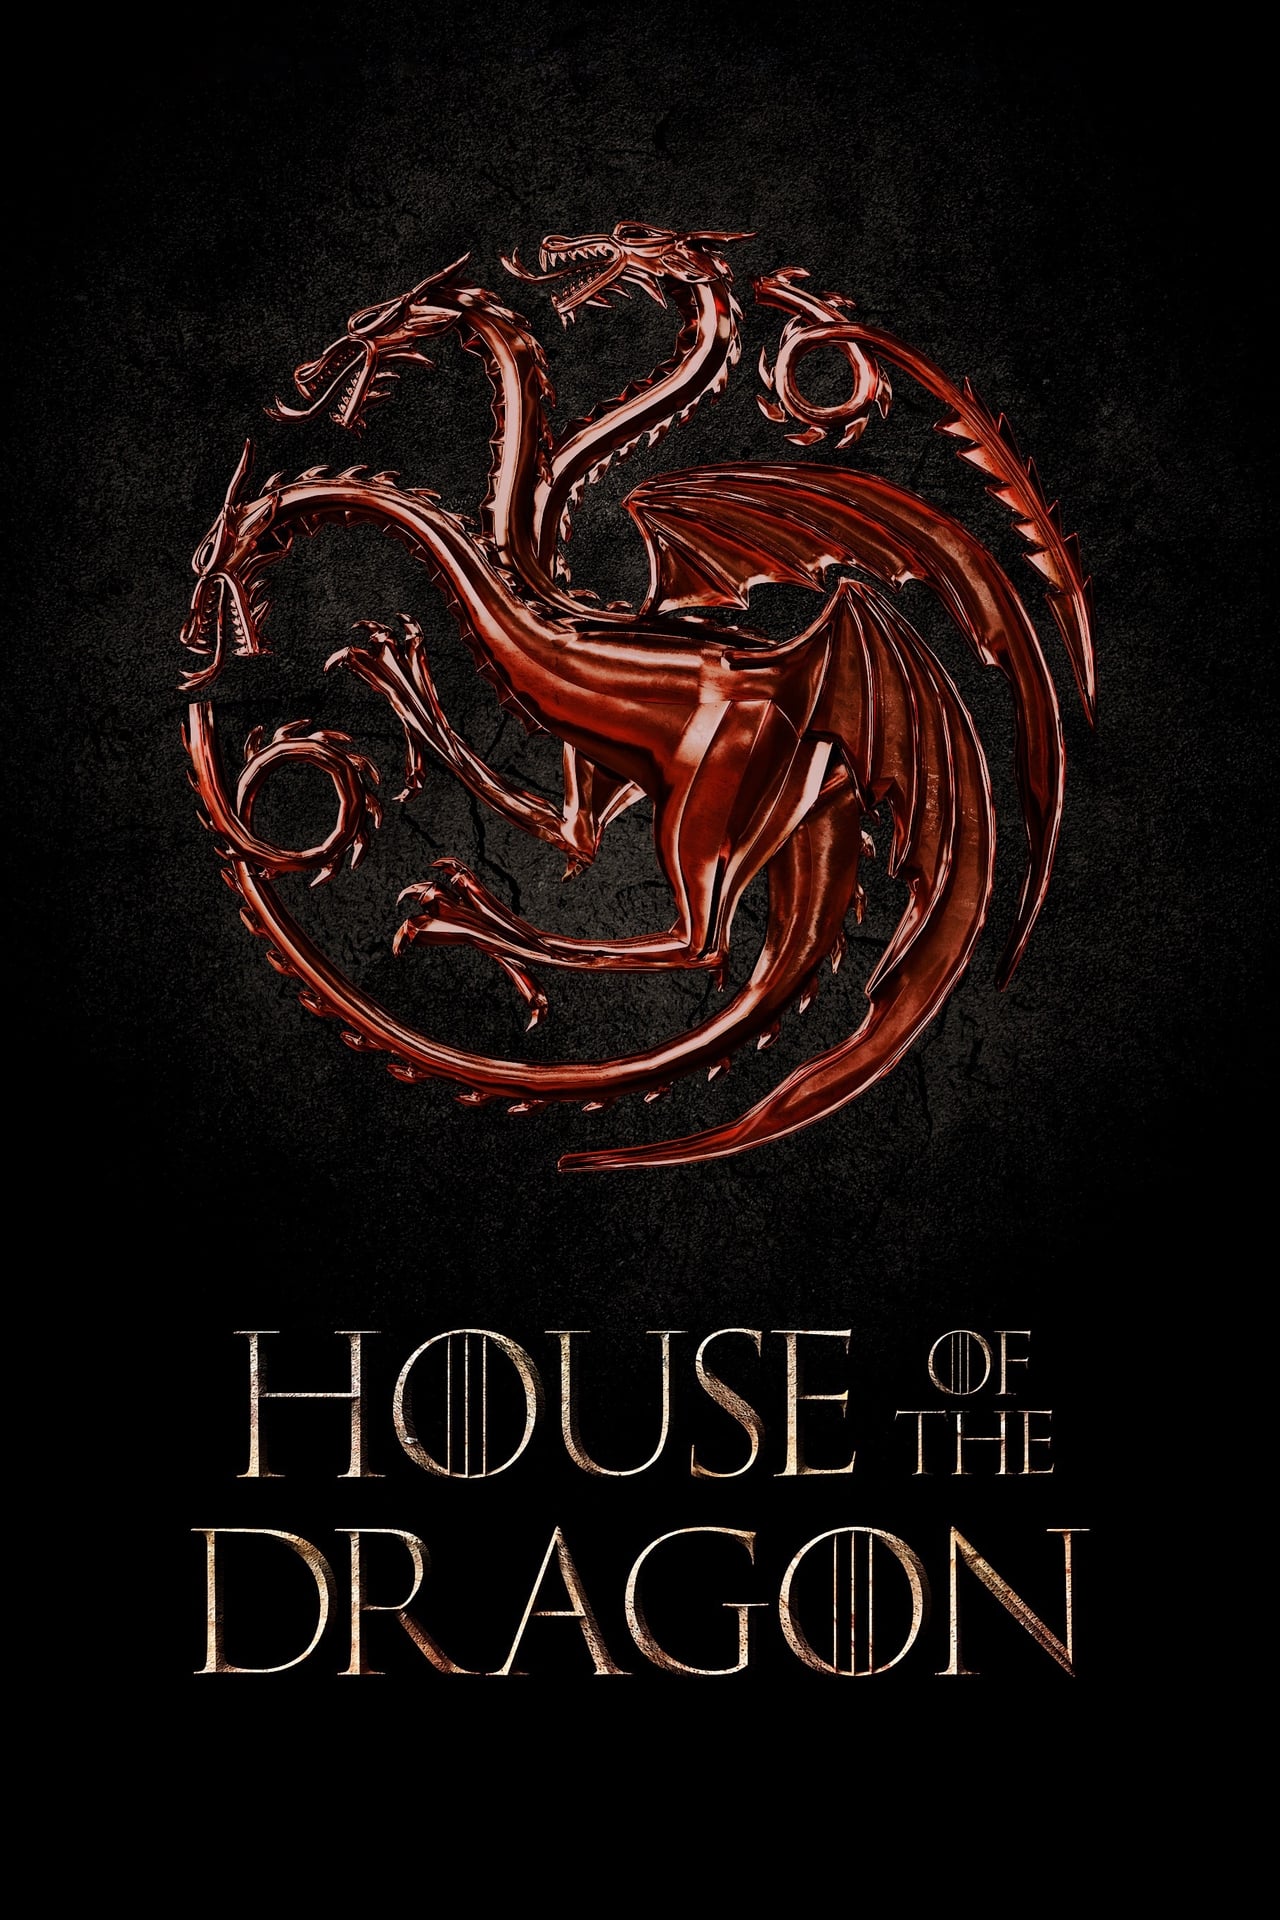 House of the Dragon (season 1)